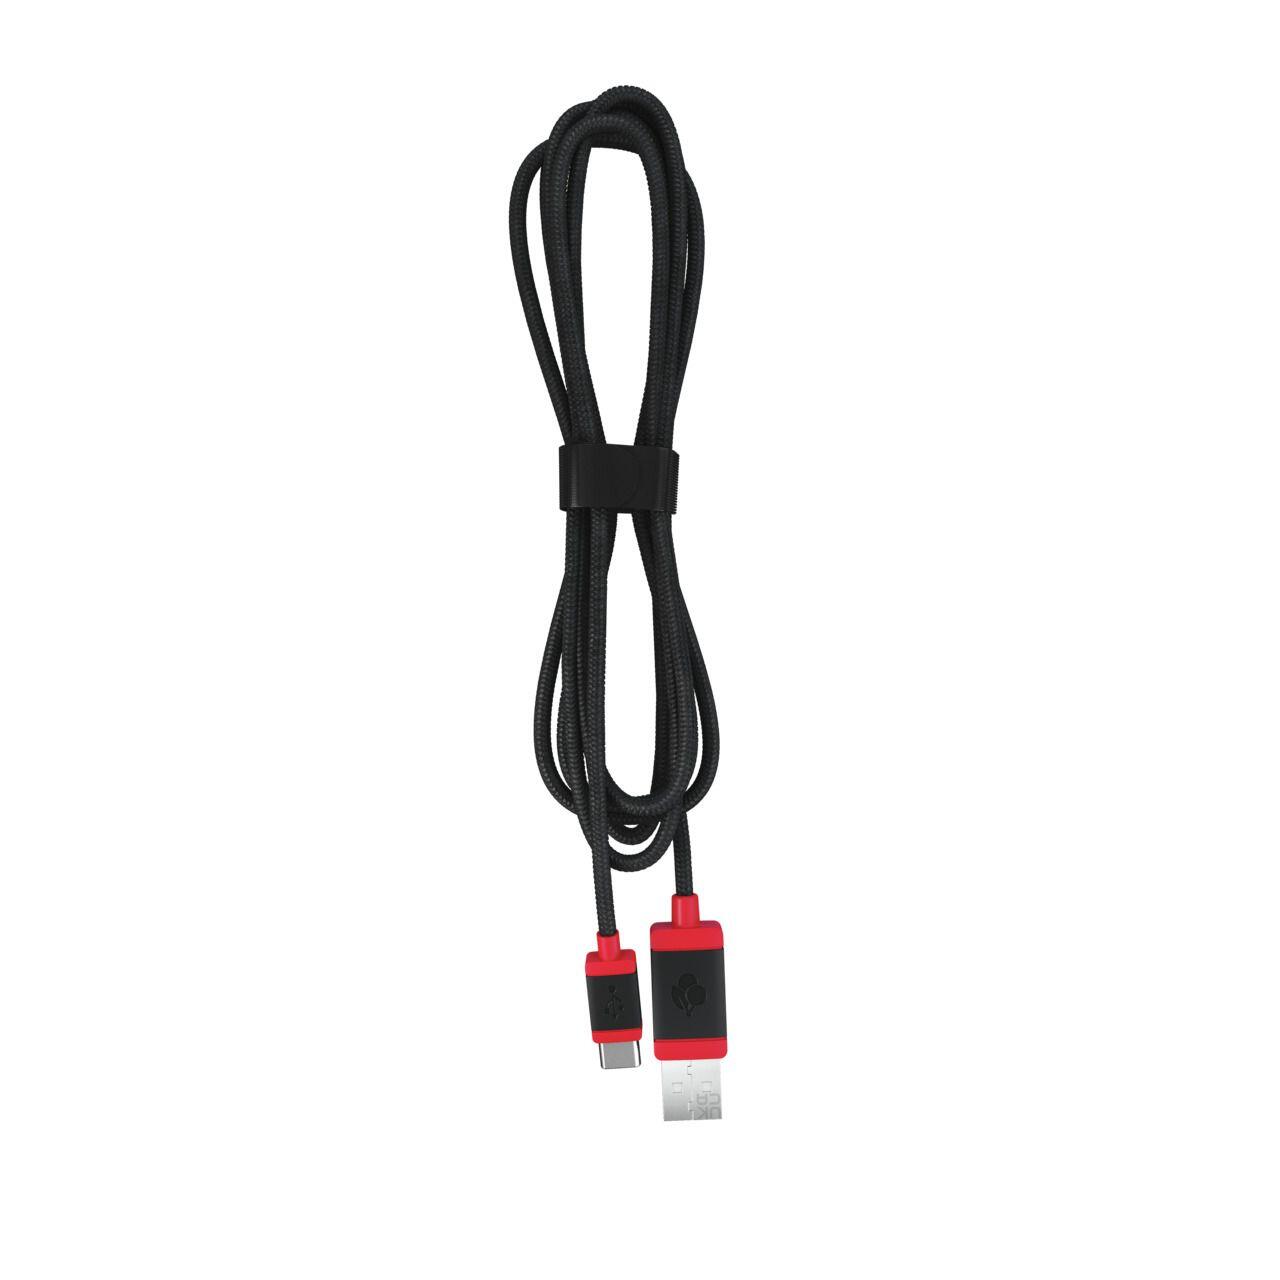 CHERRY USB Kabel 1.5 - Hochwertiges USB-C auf USB-A Kabel